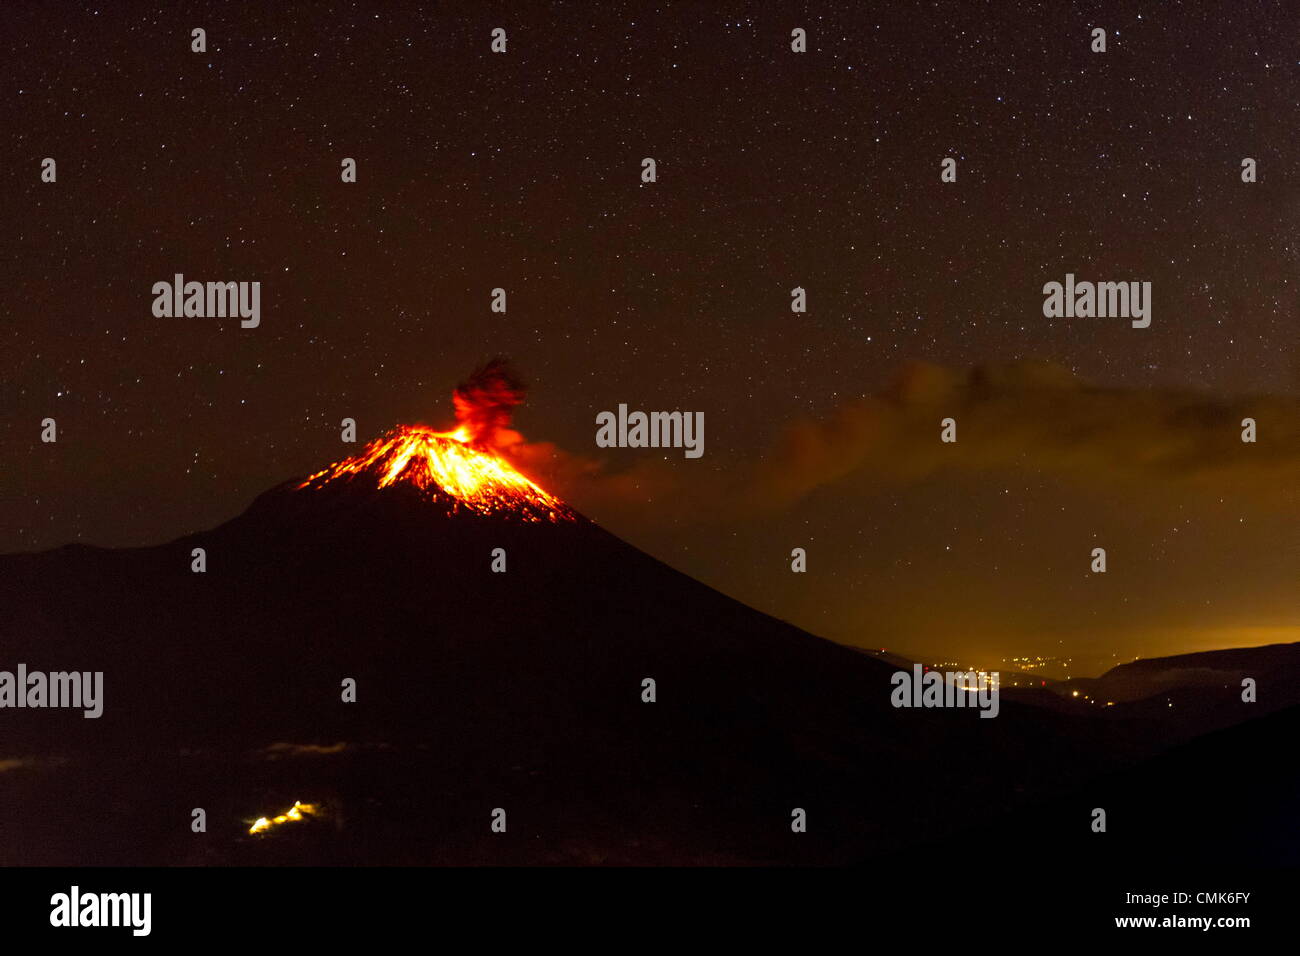 BANOS ECUADOR 20 de agosto de 2012 el volcán Tungurahua poderosa erupción  durante la noche gran